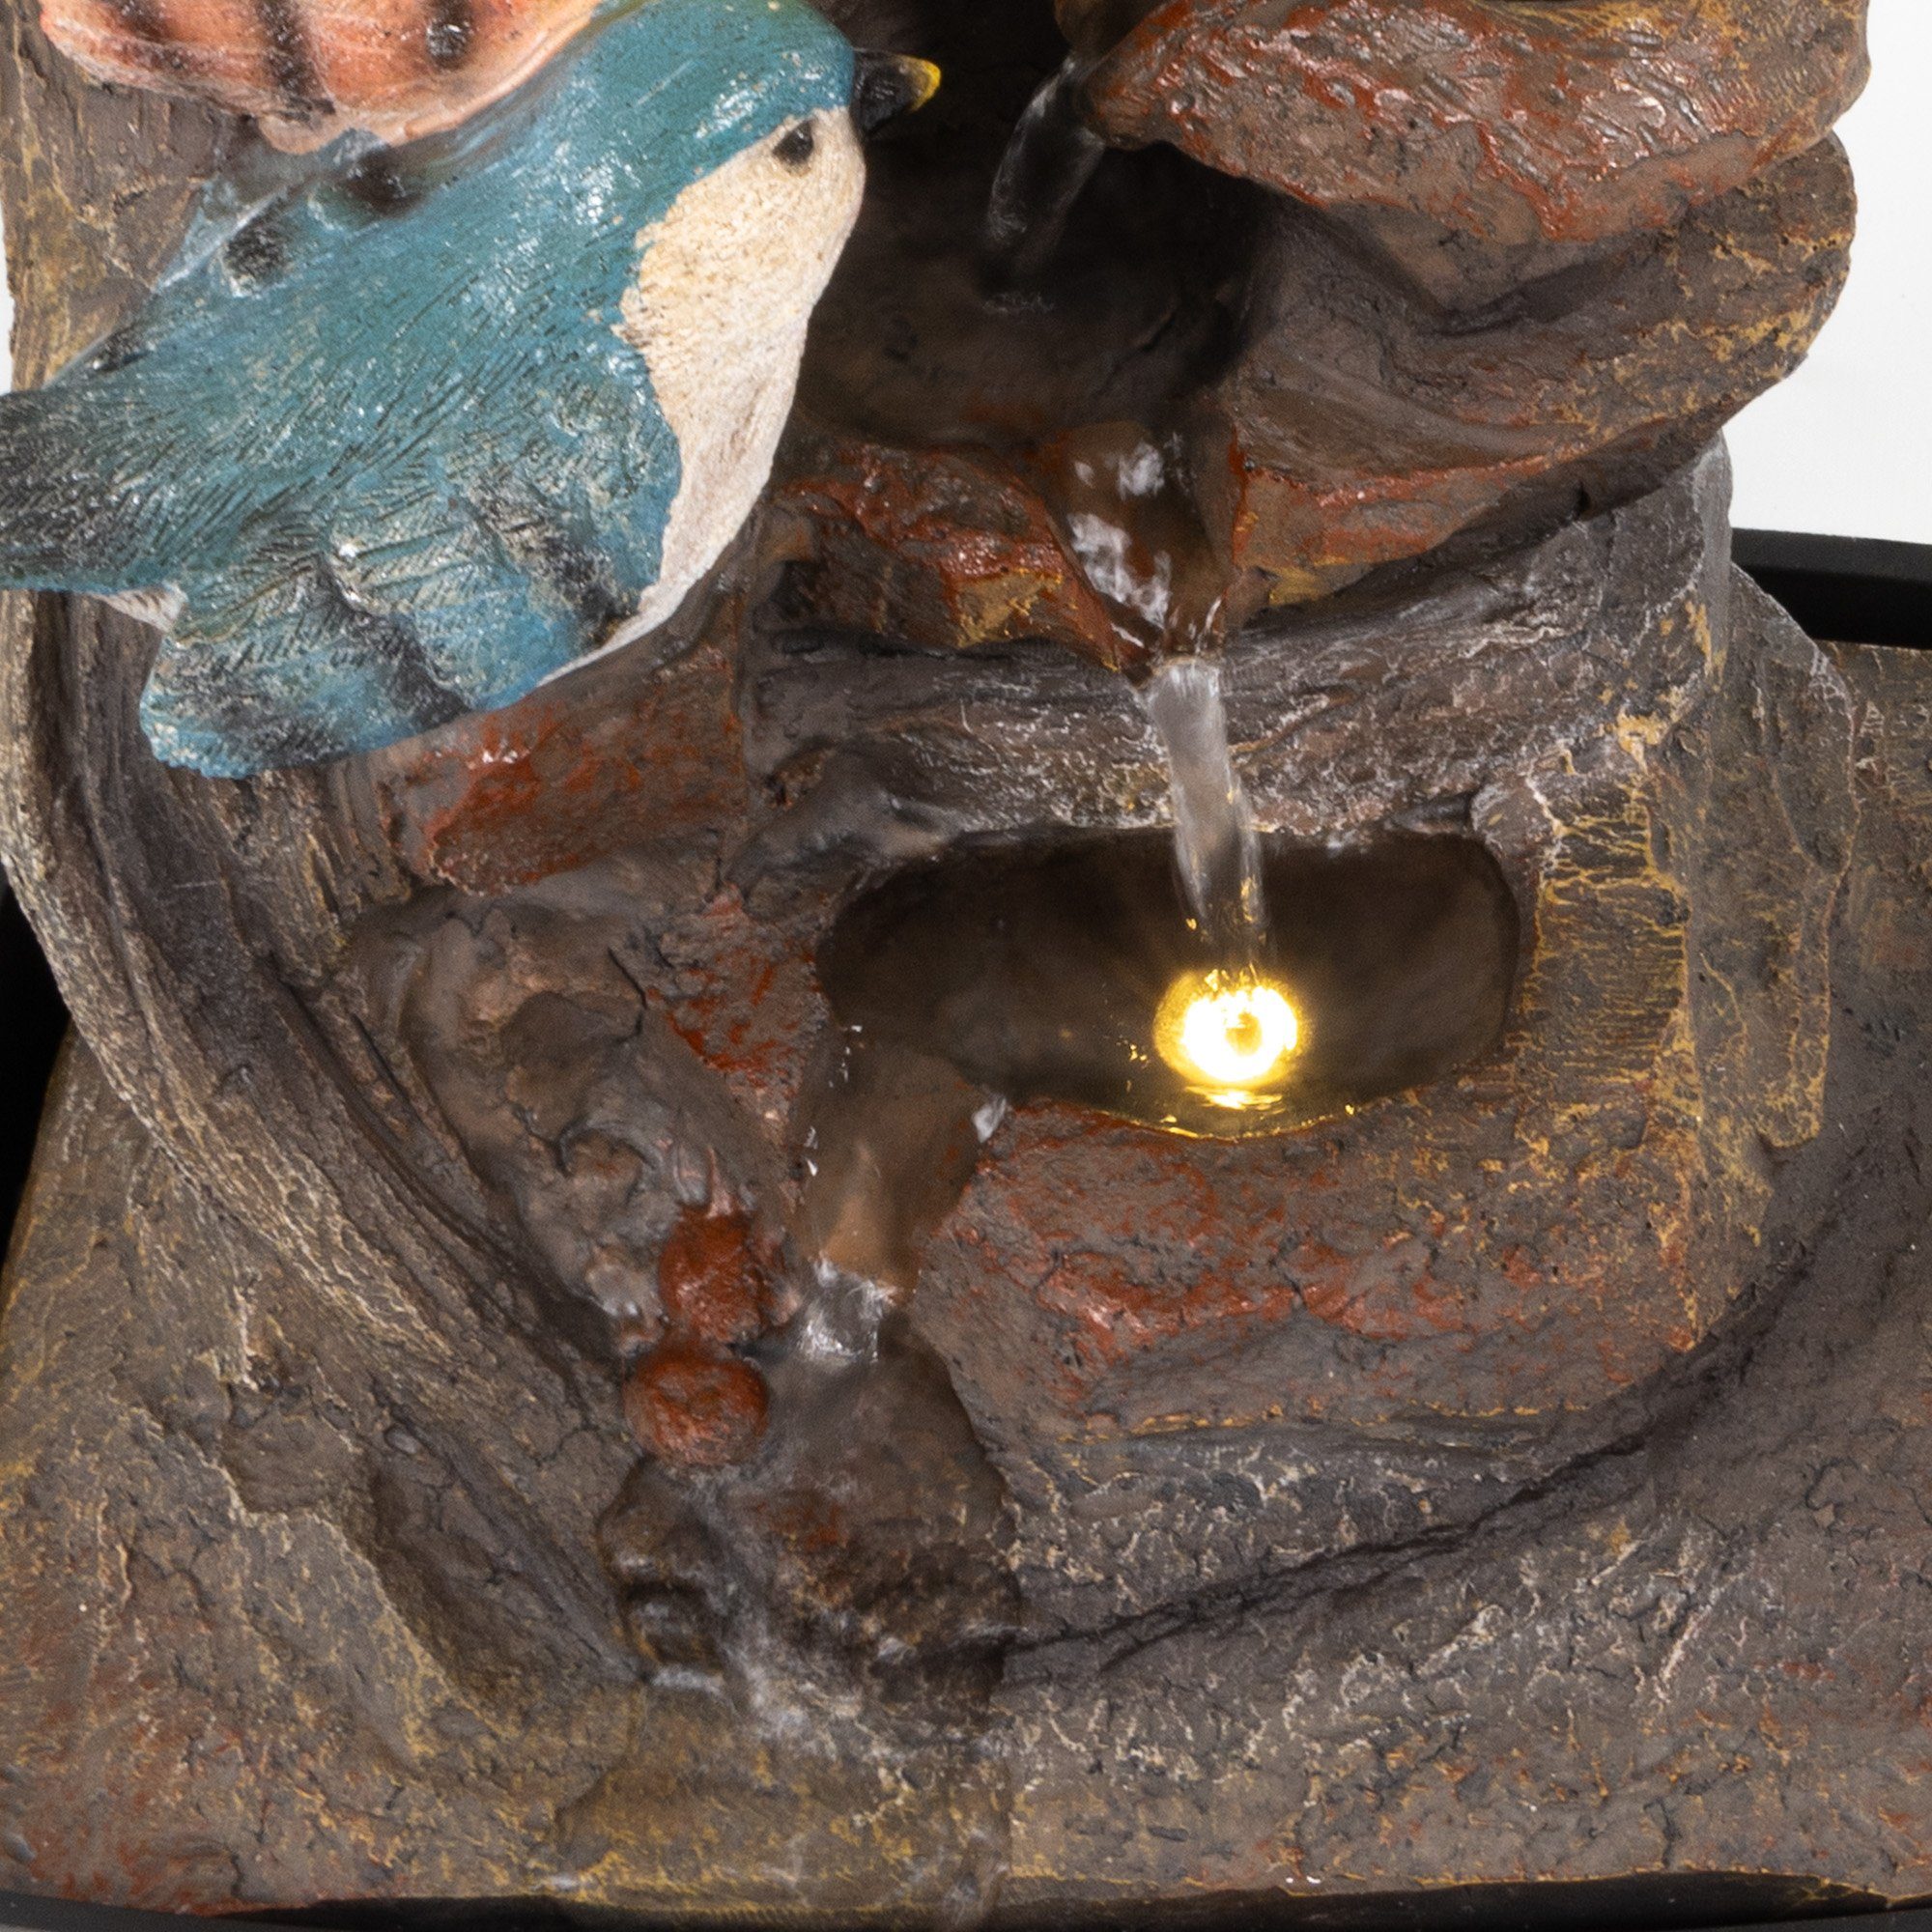 Pumpe NATIV LED-Beleuchtung Beleuchtung, Zimmerbrunnen Vögel und Motiv-Tischbrunnen mit